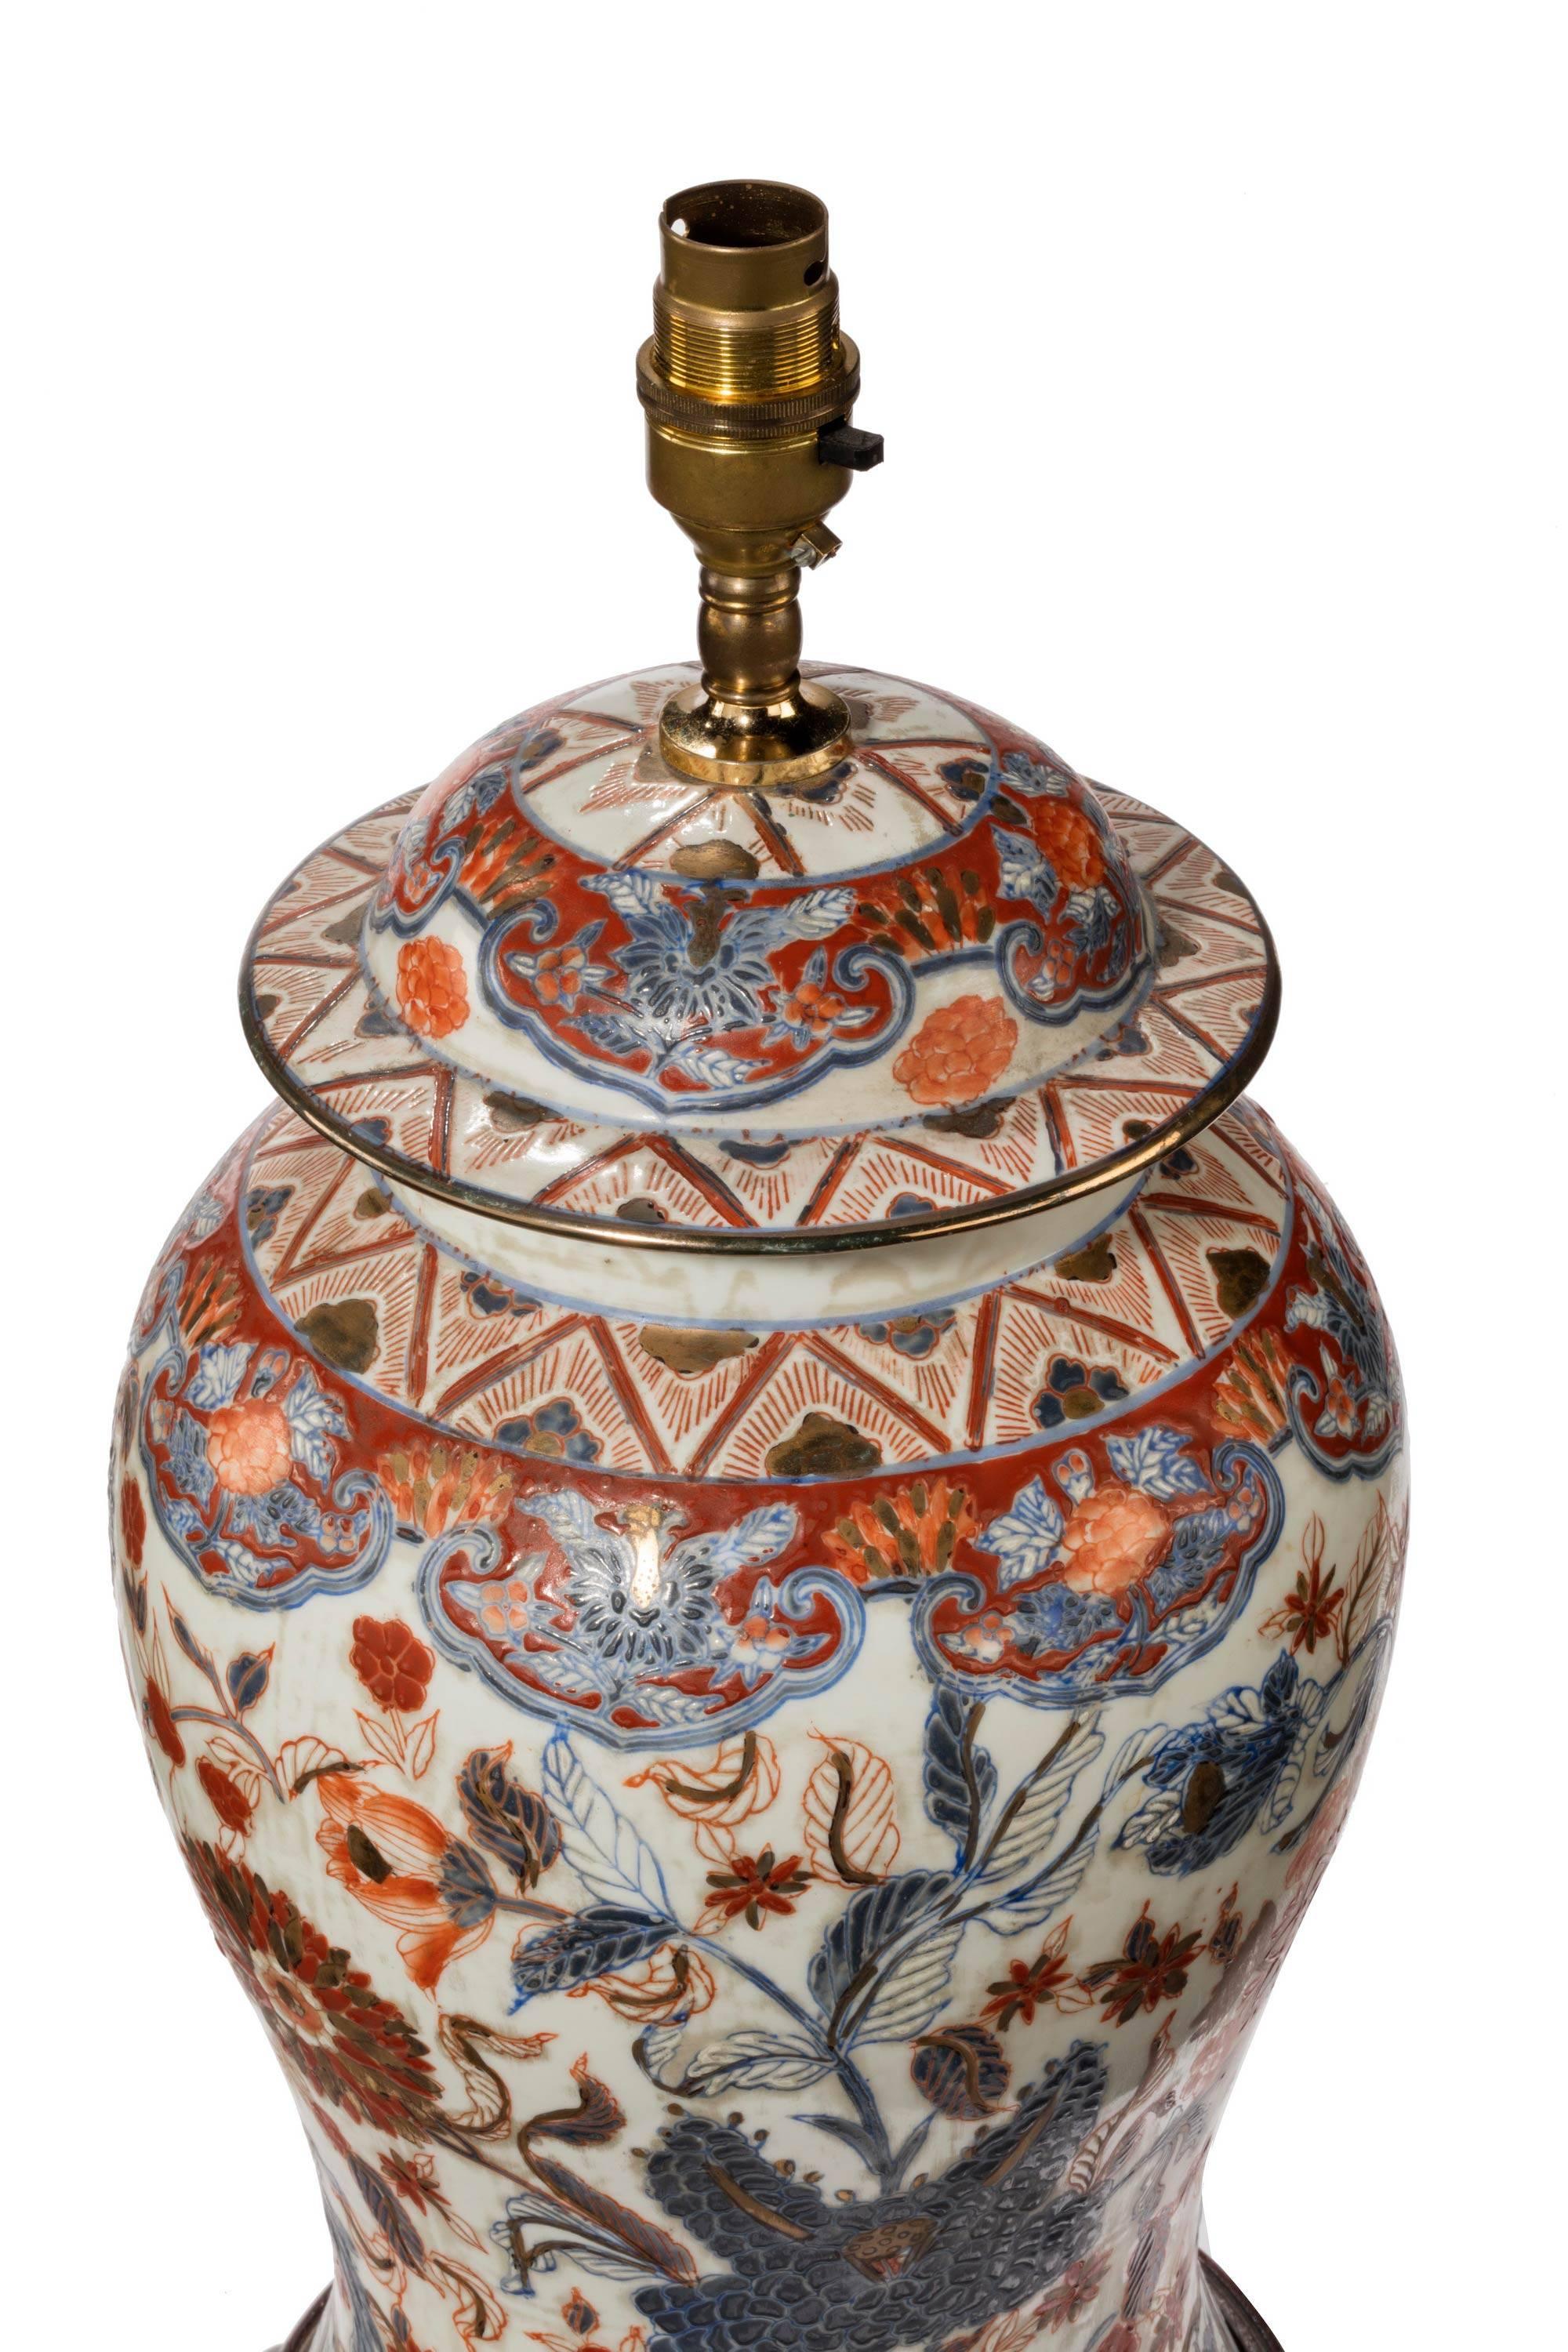 Chinese Mid-20th Century Porcelain Lidded Vase Lamp in the Imari Palette